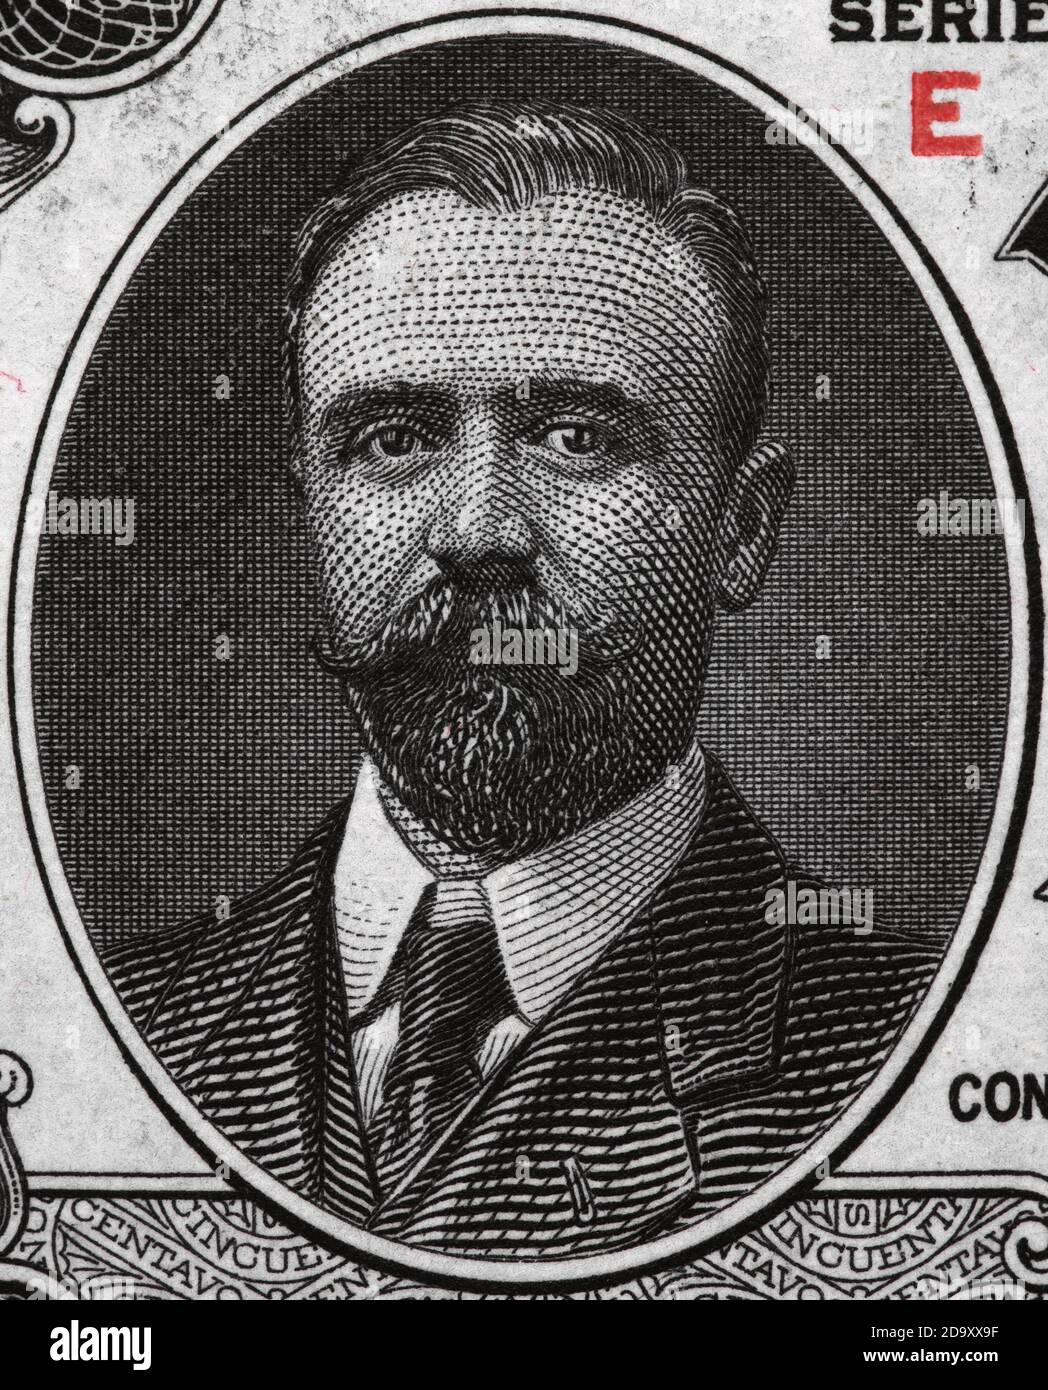 Francisco Madero portrait on Mexico Sonora 50 centavo (1915) banknote, 33th President, Mexican Revolution revolutionary, money closeup macro Stock Photo